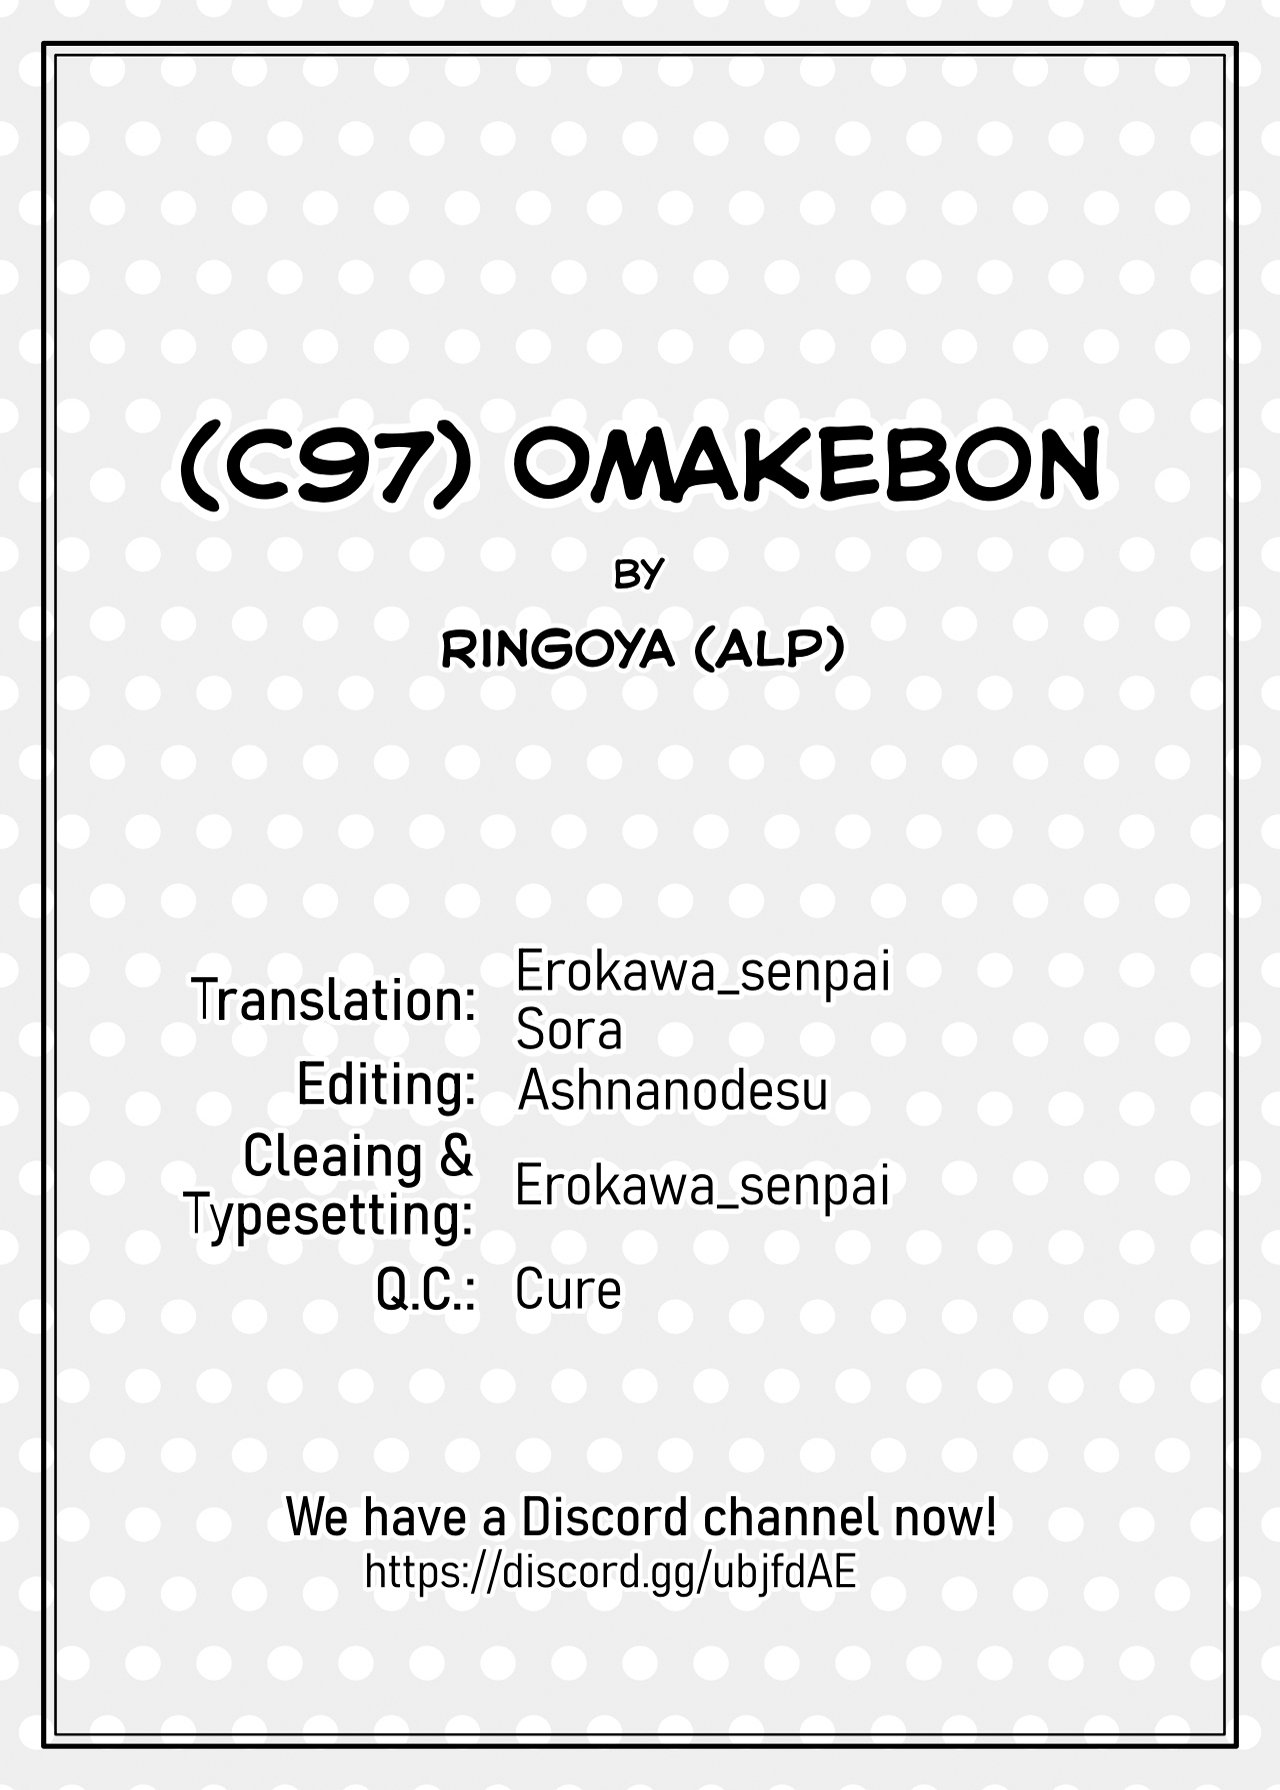 C97 Omakebon (Ero Projects) - 10